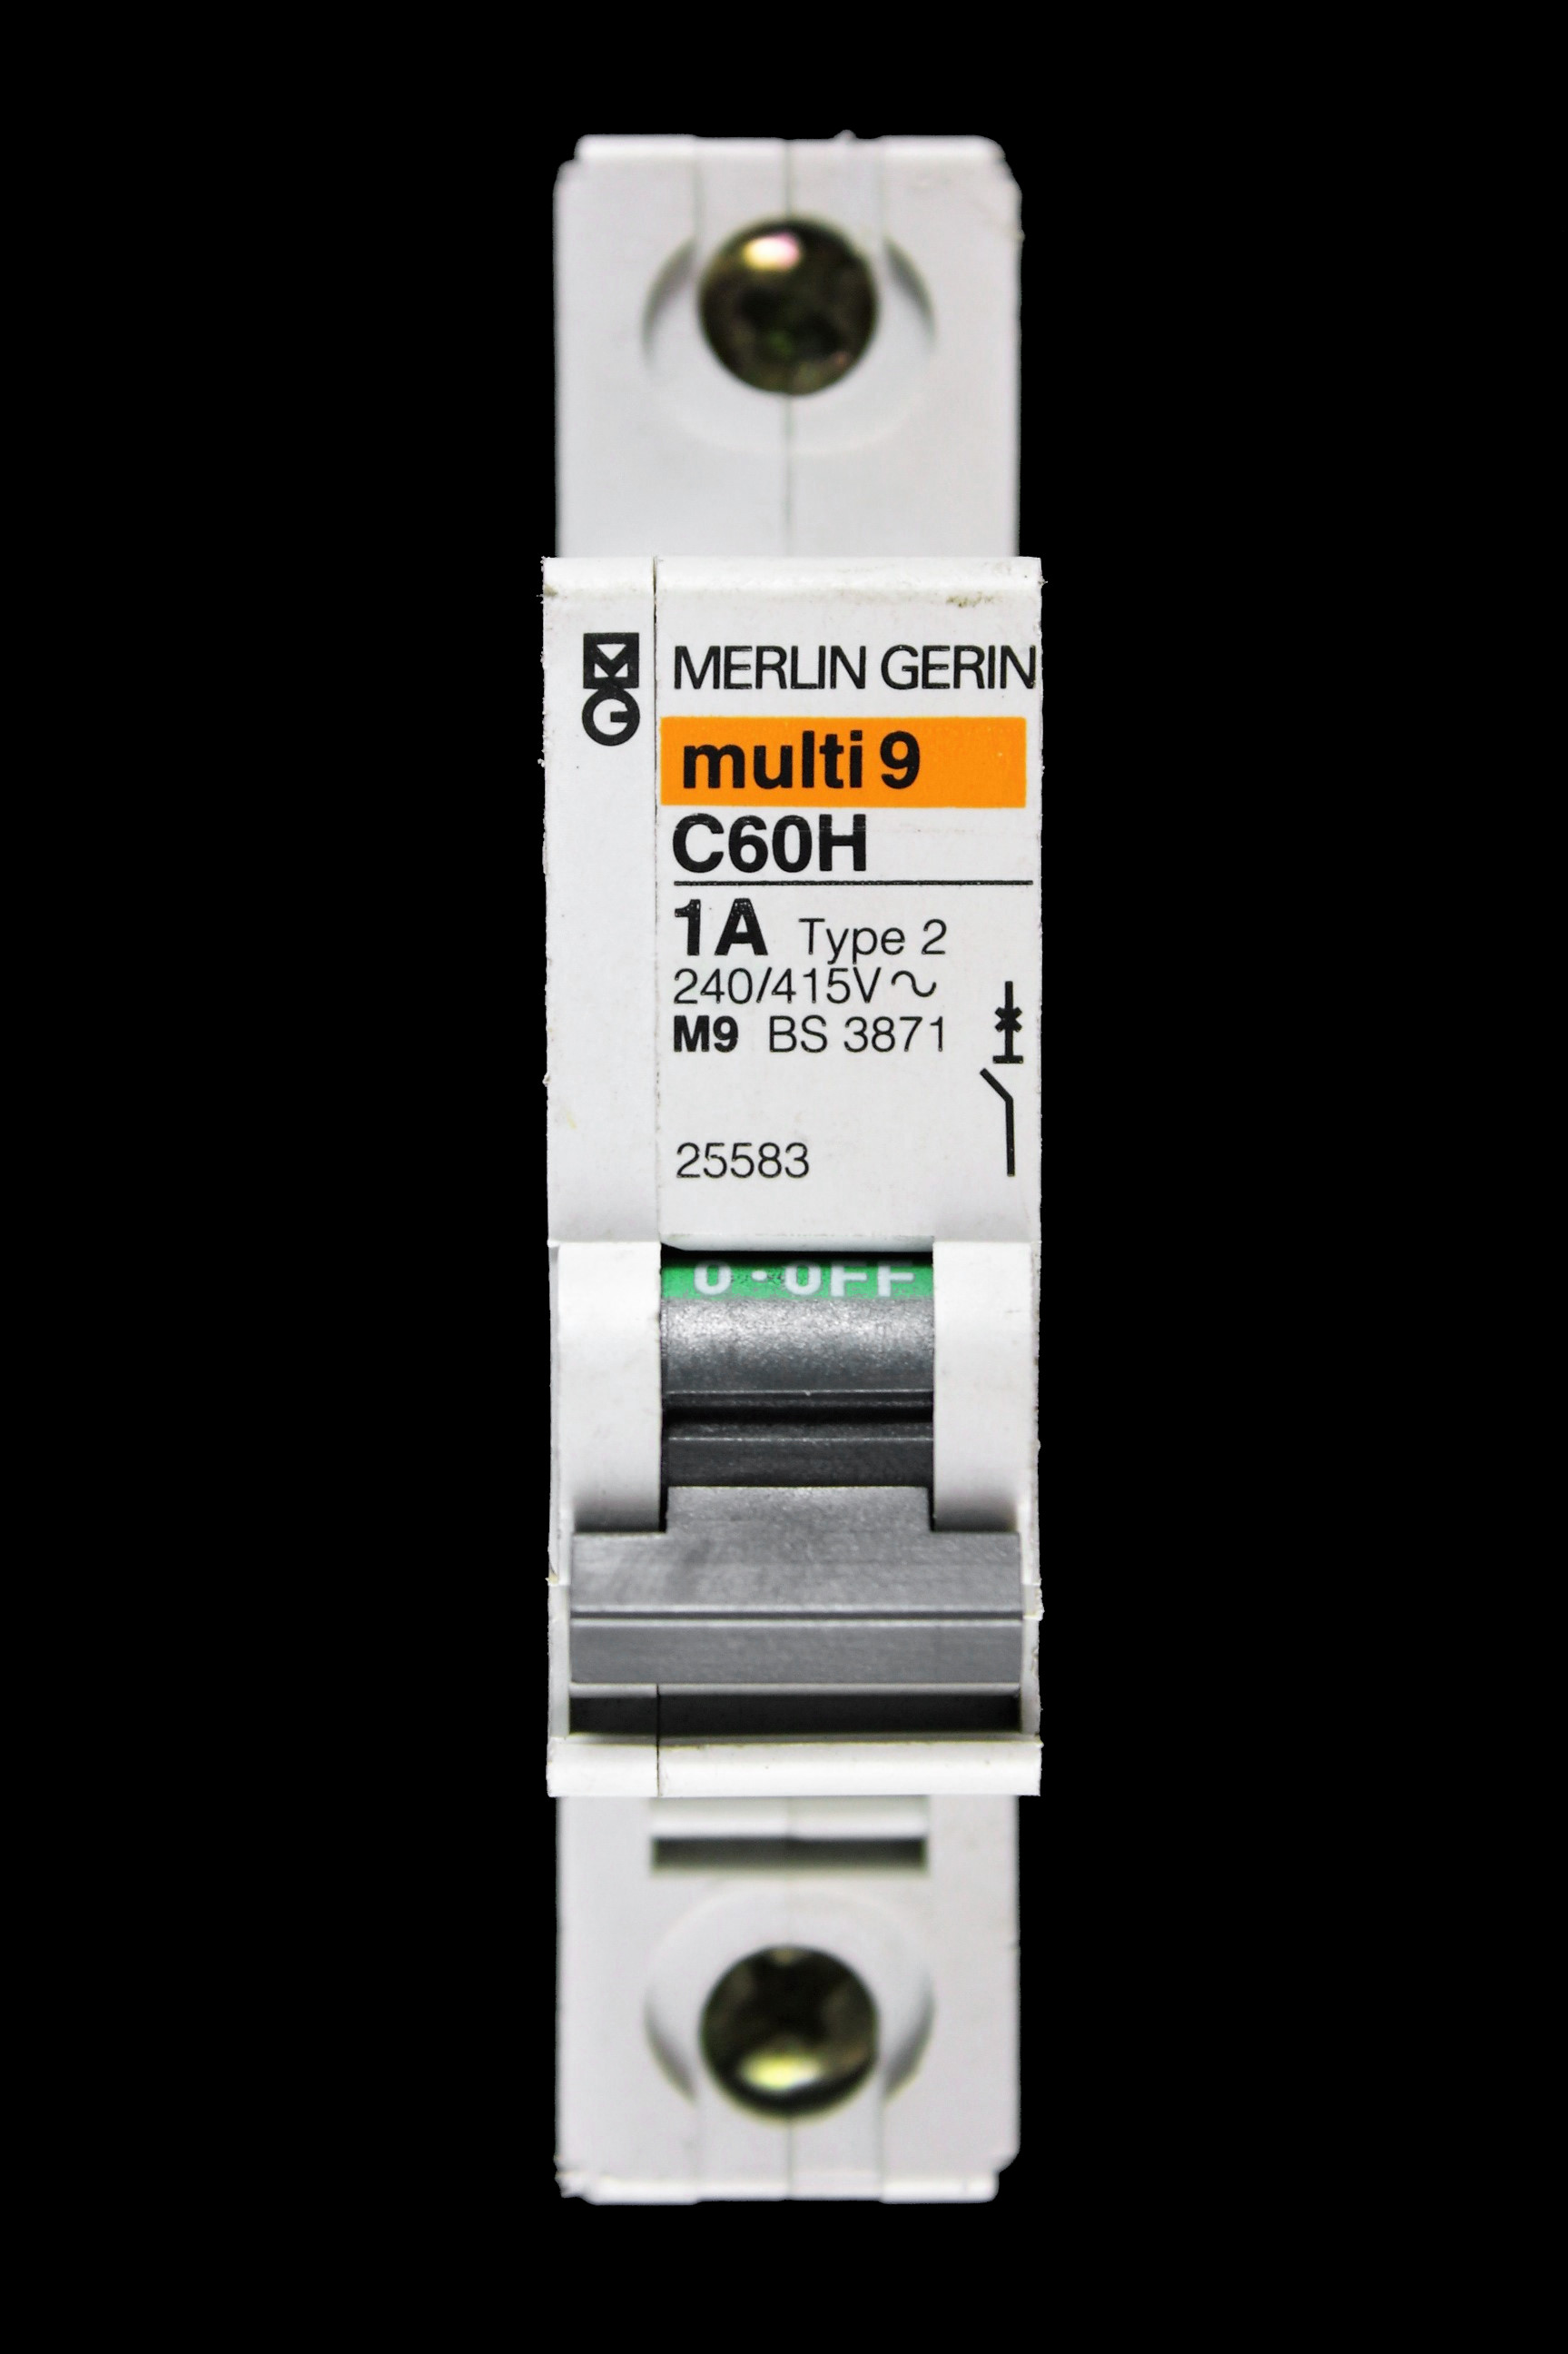 MERLIN GERIN 1 AMP TYPE 2 M9 MCB CIRCUIT BREAKER 25583 C60H MULTI9